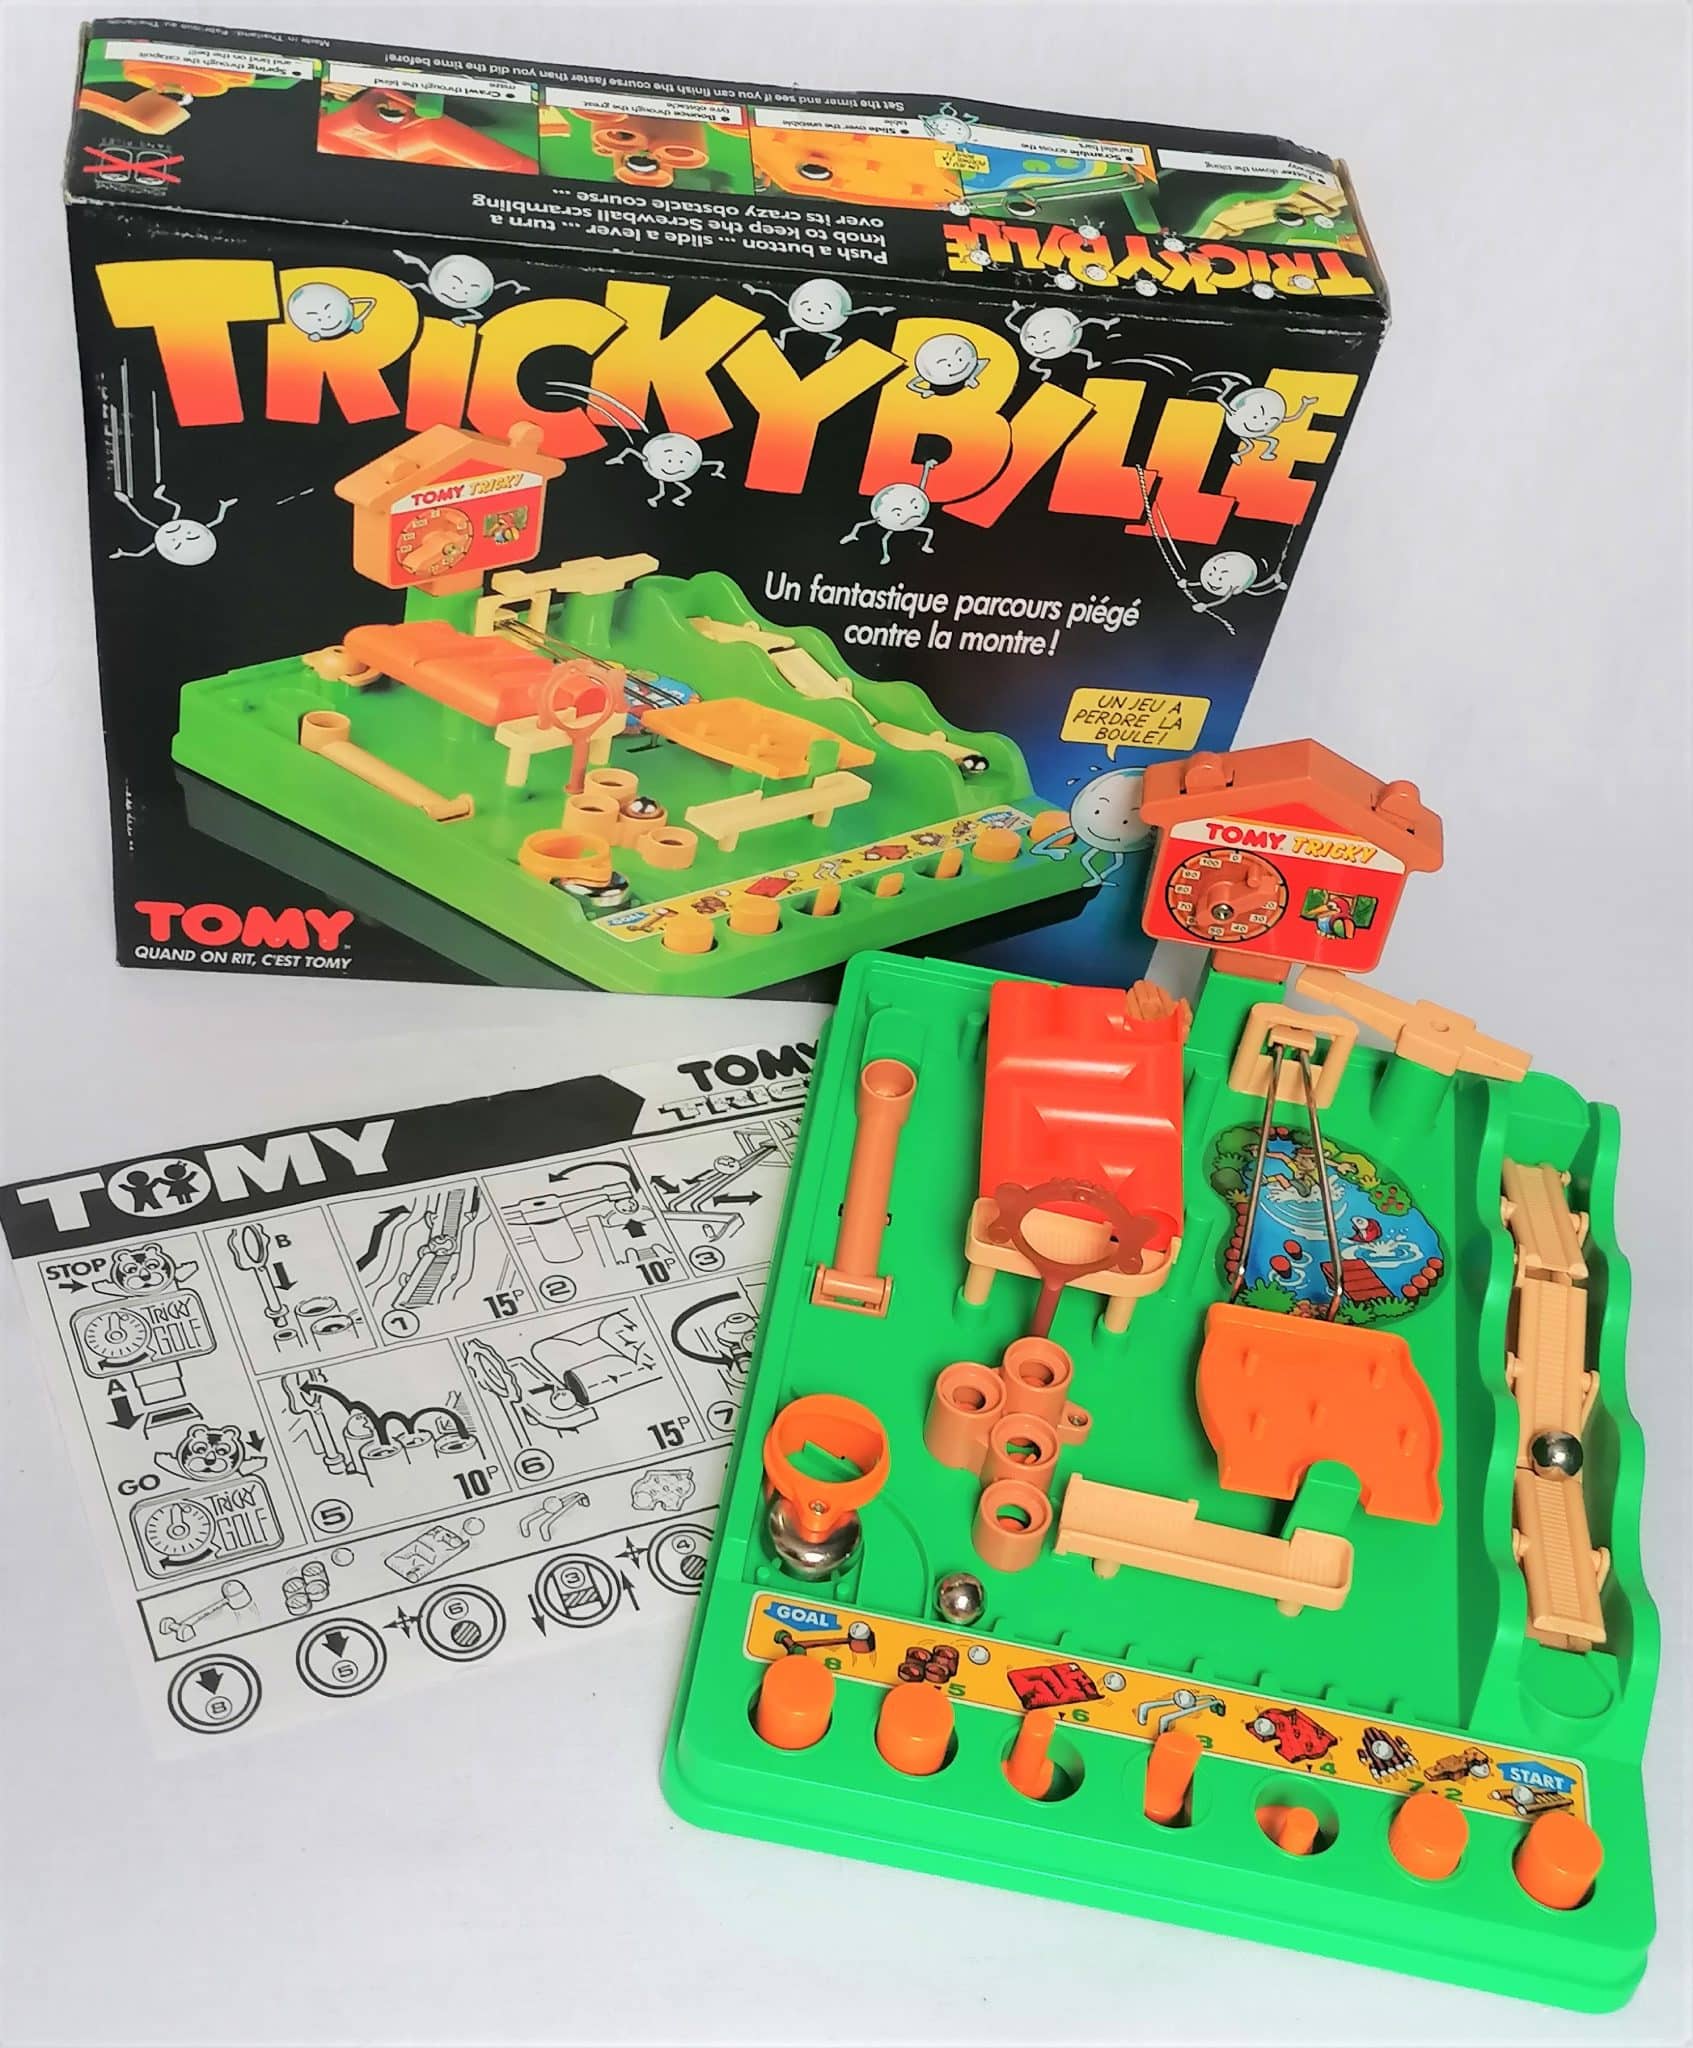 TrickyBille Tomy - Grenier d'enfance